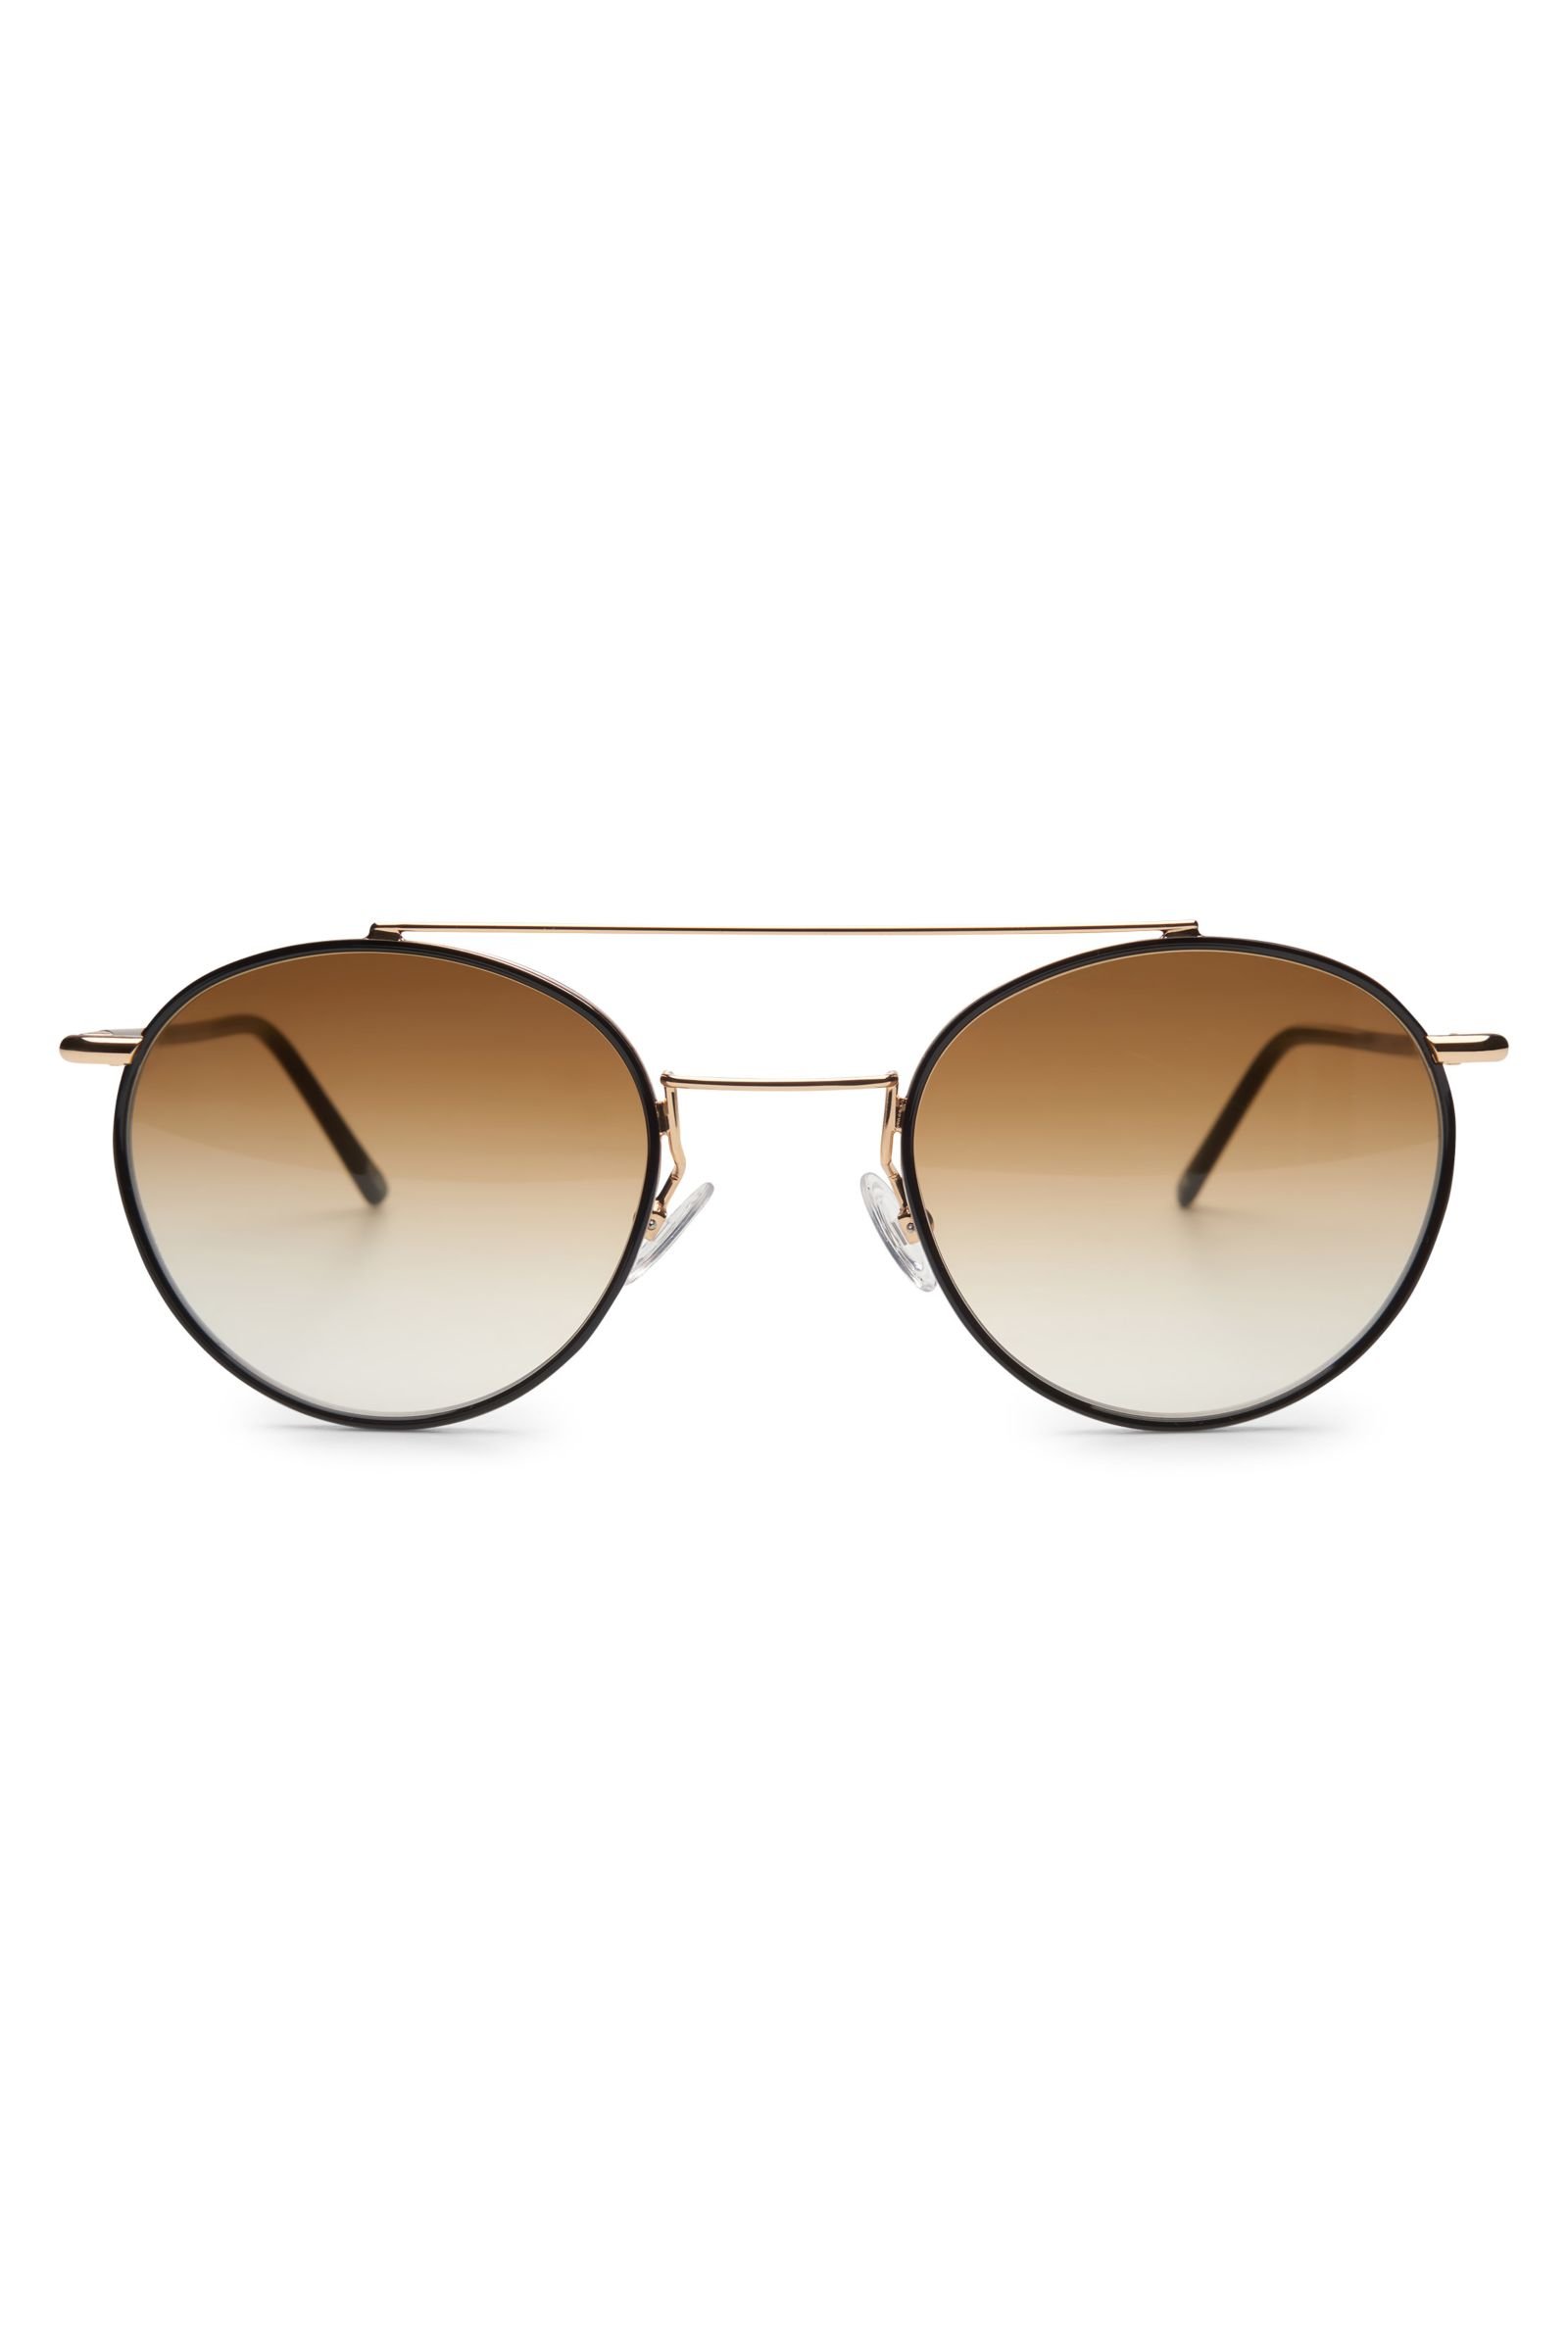 Sunglasses 'Humphrey' black/gold/brown